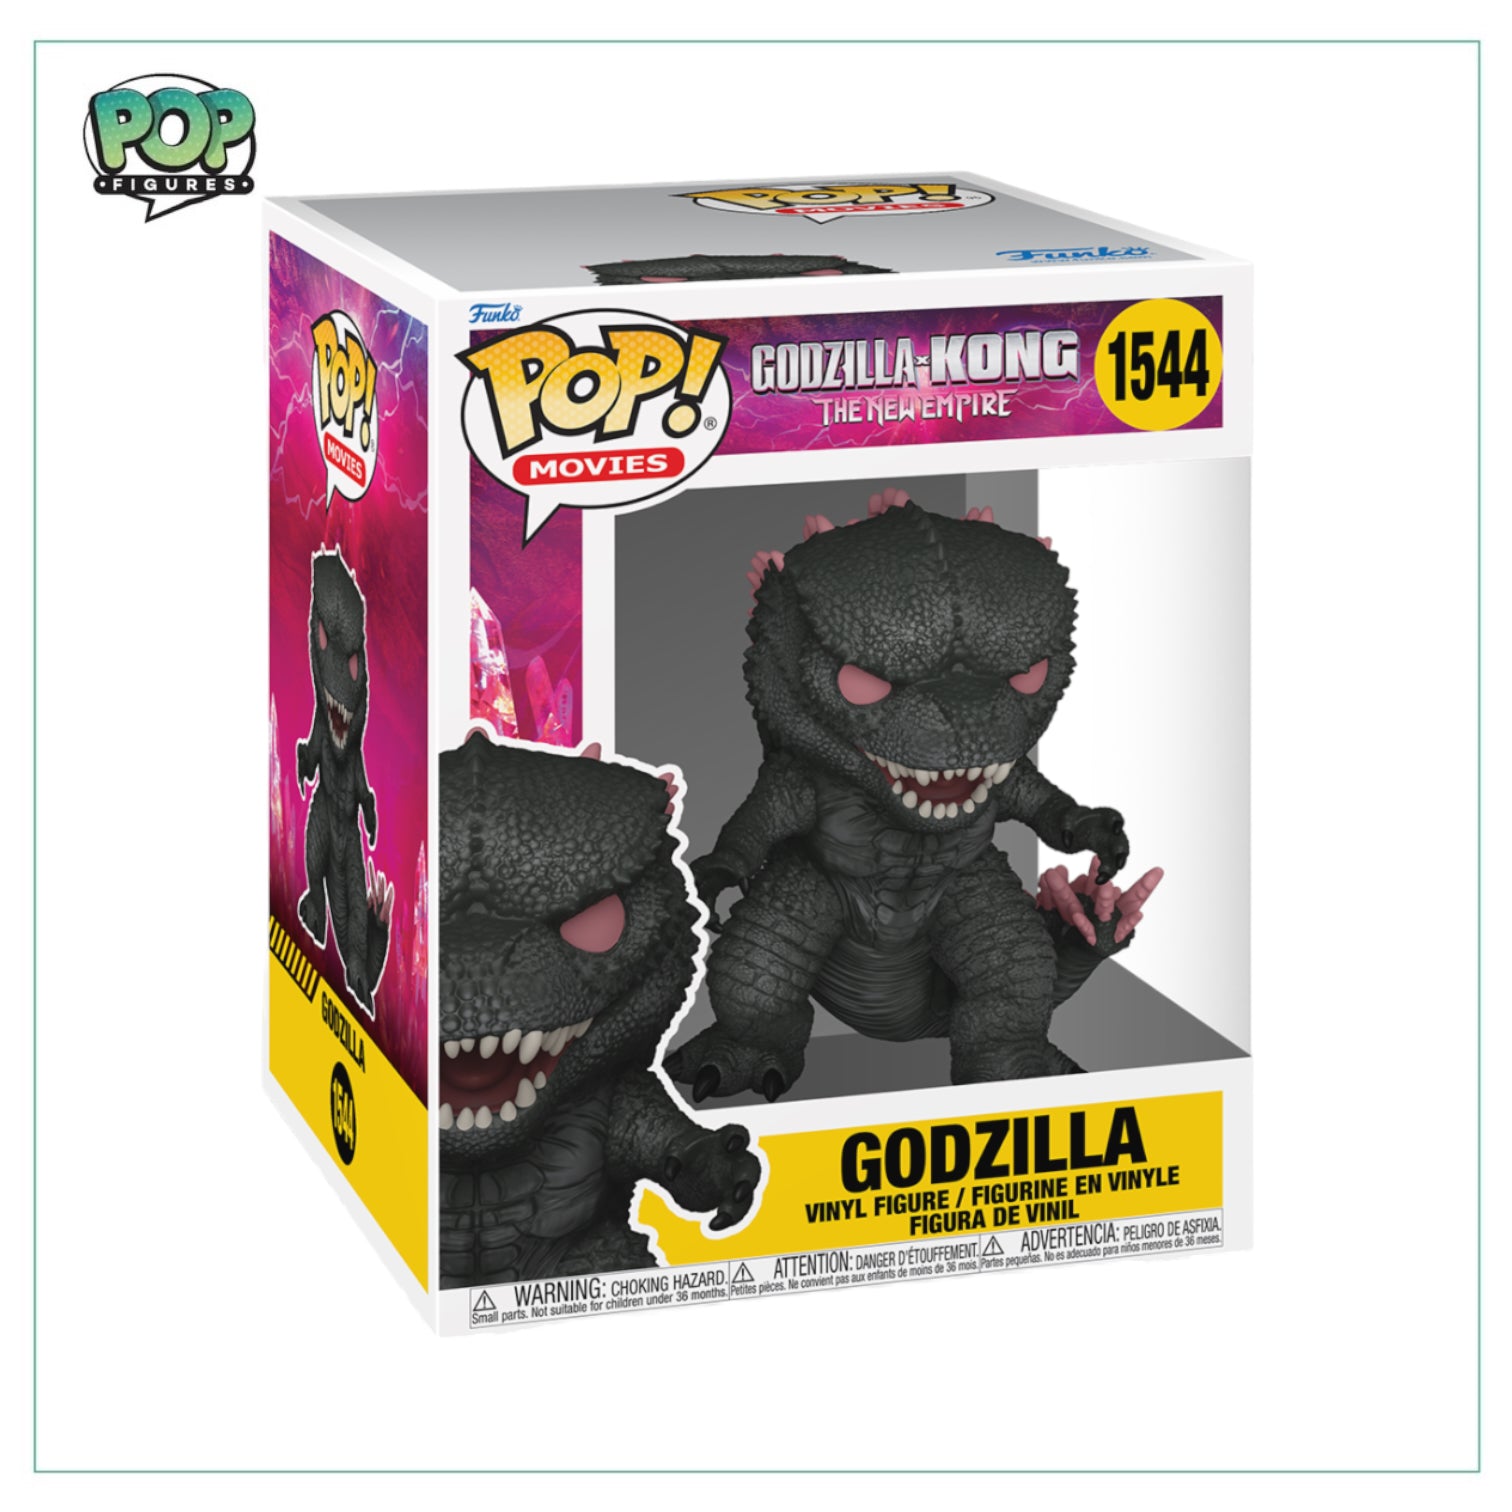 Godzilla #1544 Funko Pop! Super Godzilla VS King Kong: The New Empire - PREORDER